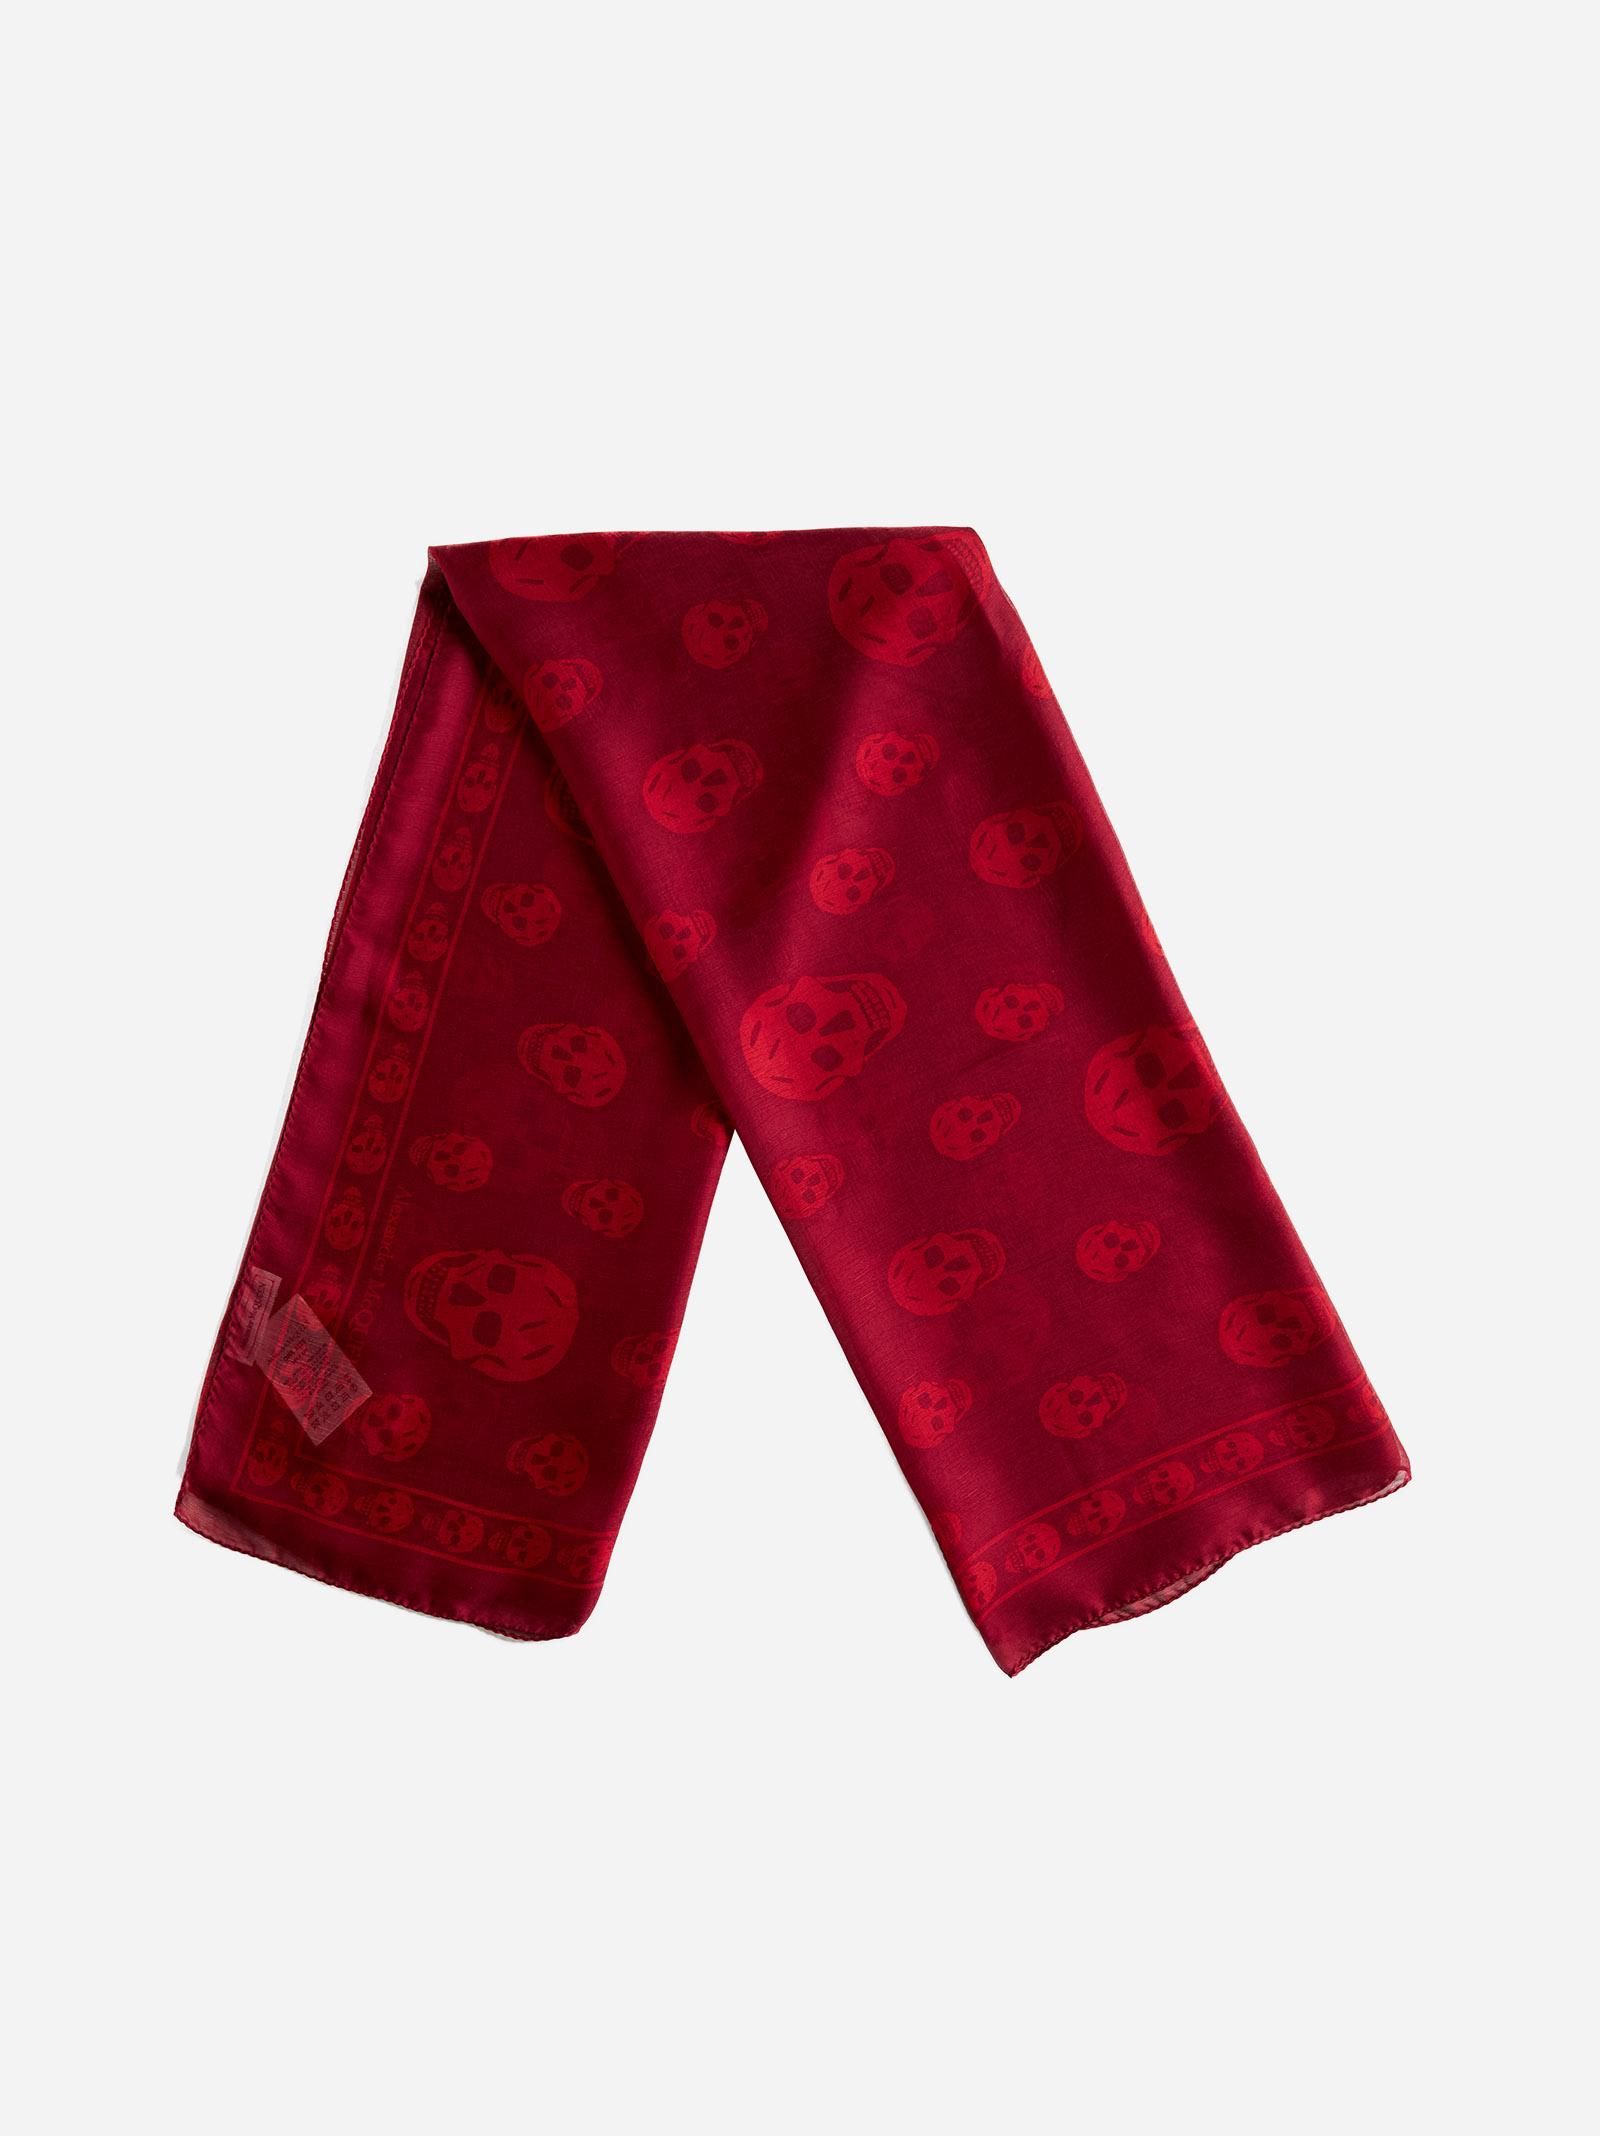 Alexander McQueen Skull Print Silk Scarf in Red | Lyst